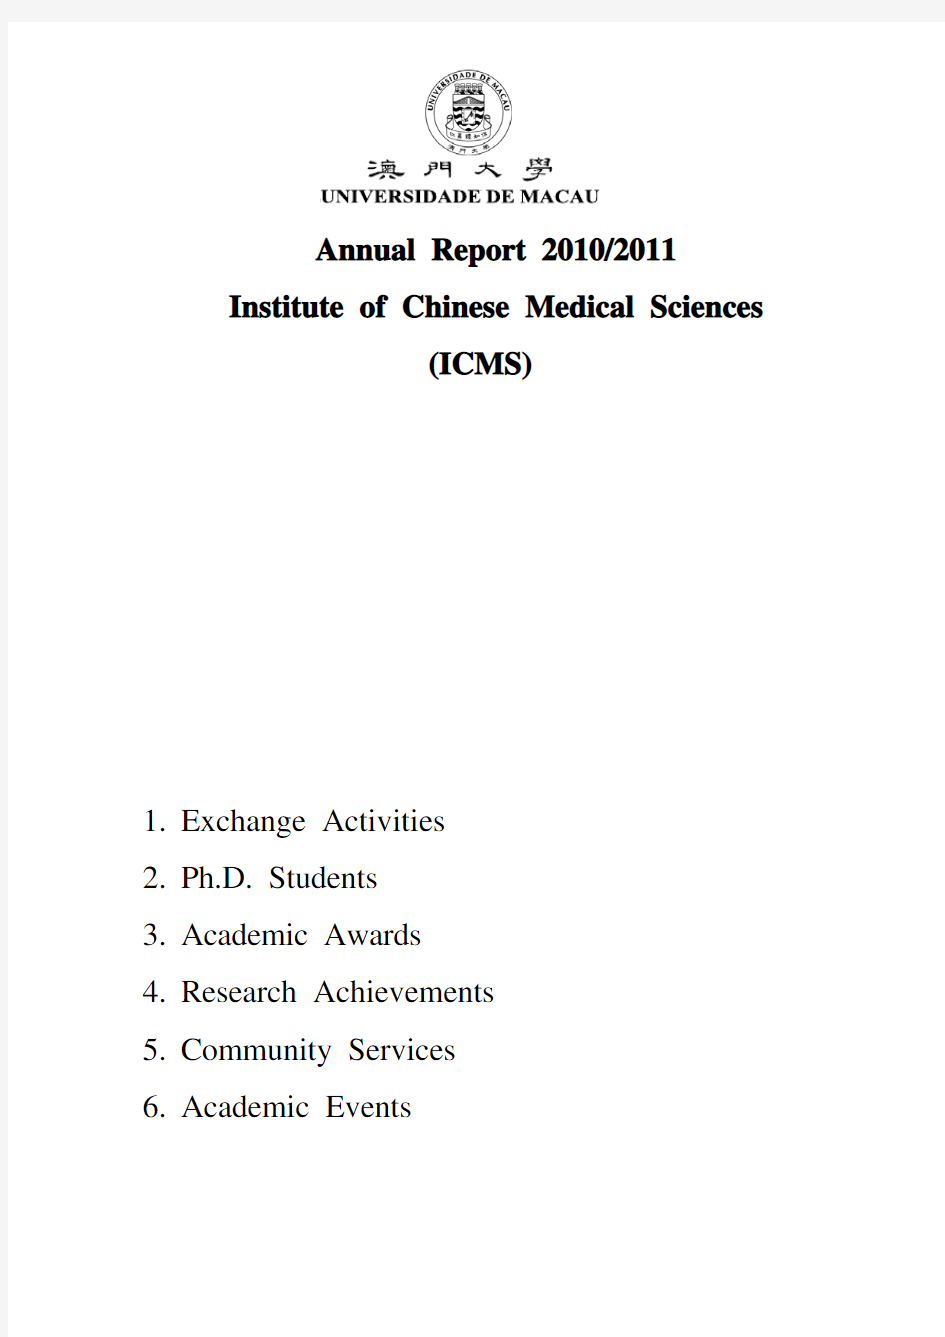 Microsoft Word - Annual Report 2010-11 Engdoc-Annual